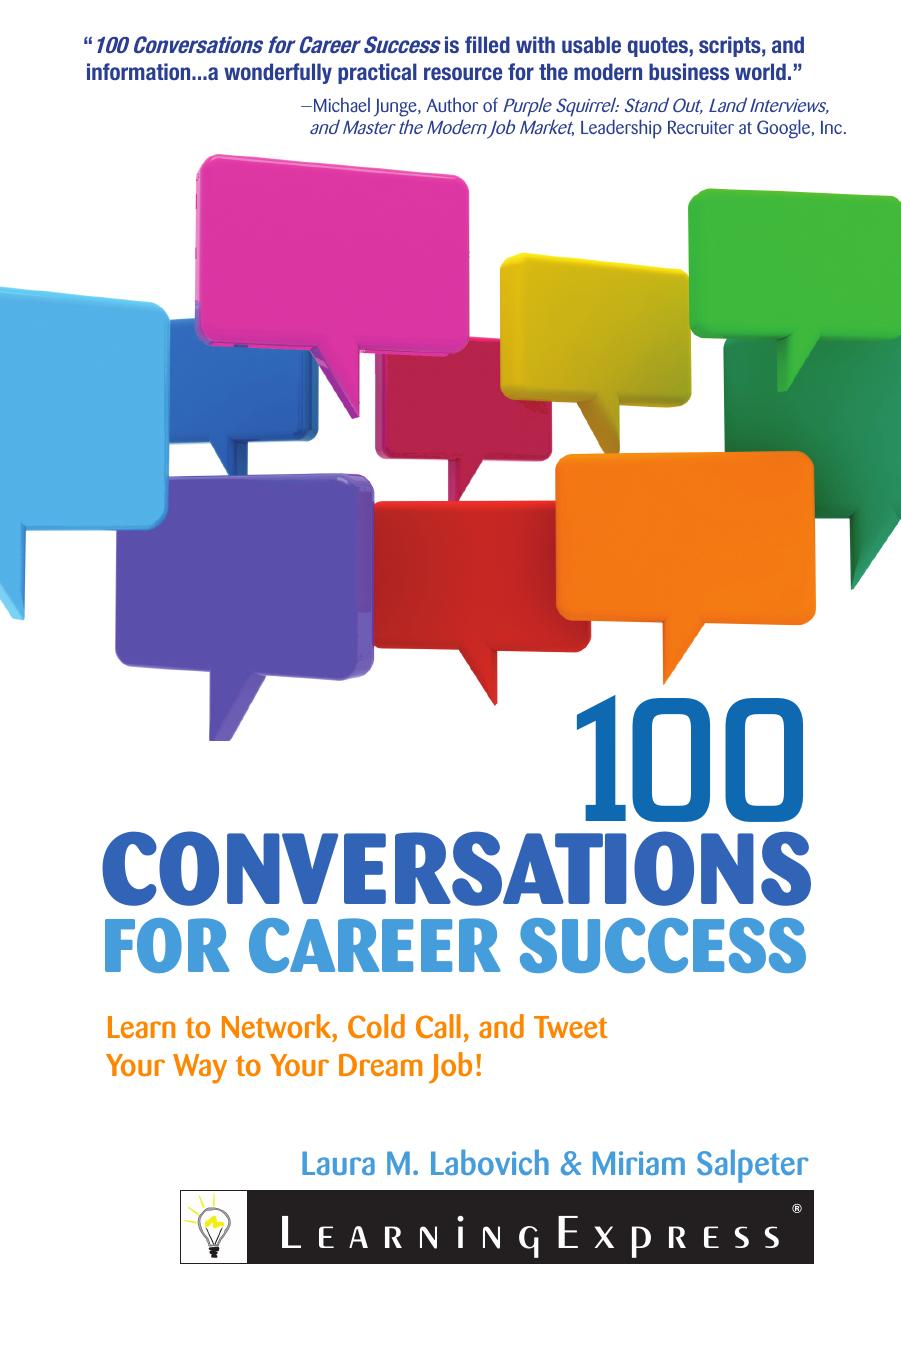 100 Conversations for Career Success - Miriam Salpeter.jpg